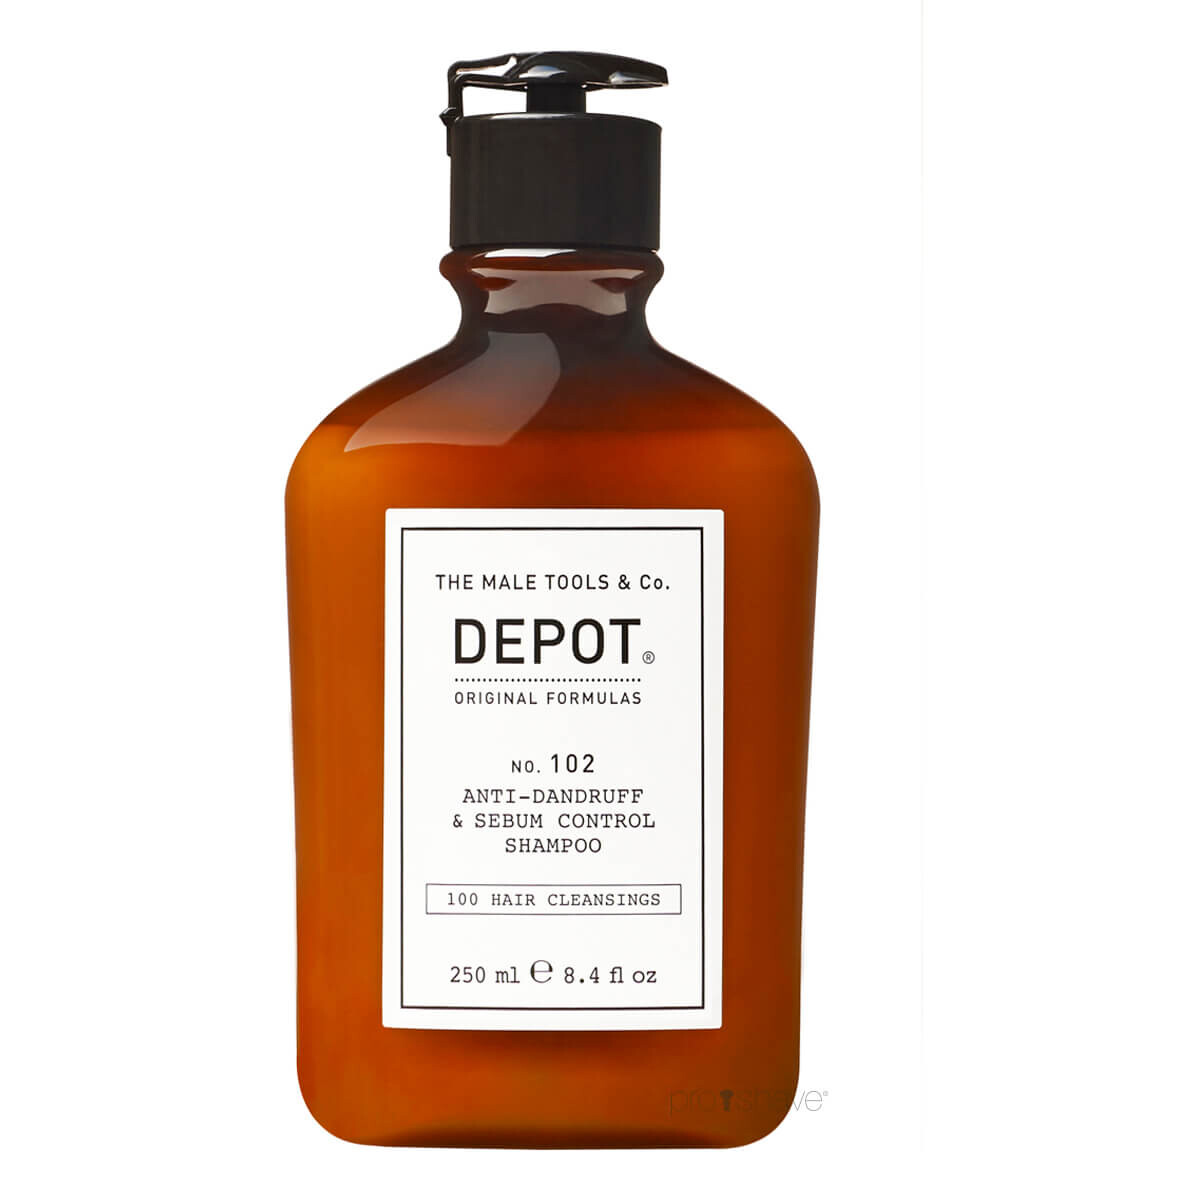 Se Depot Anti-Dandruff & Sebum Control Shampoo, No. 102, 250 ml. hos Proshave